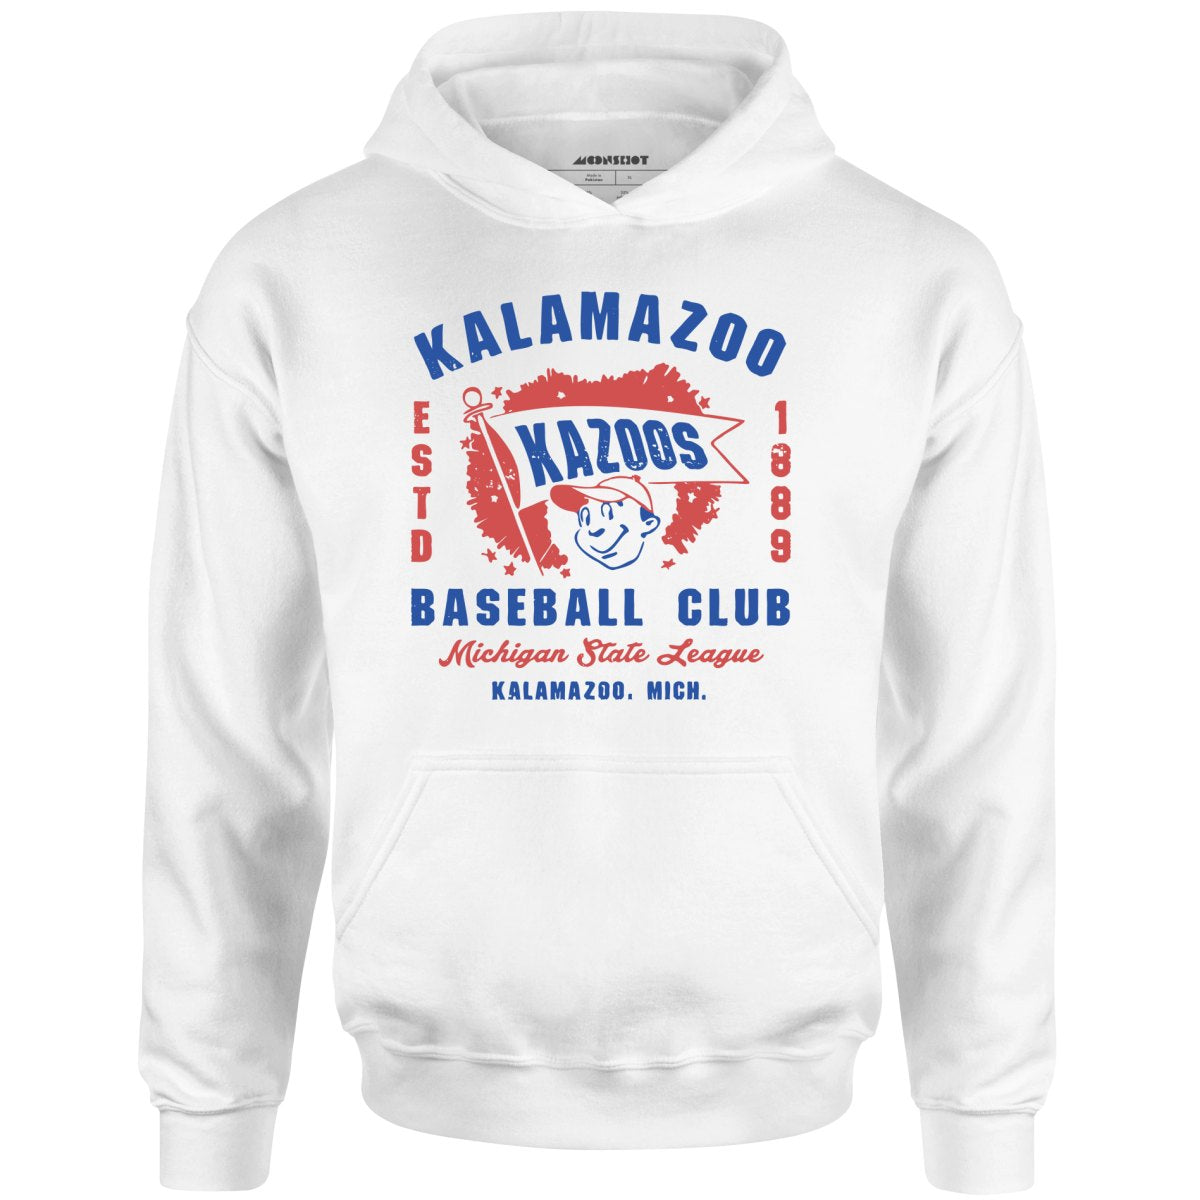 Kalamazoo Kazoos - Michigan - Vintage Defunct Baseball Teams - Unisex Hoodie